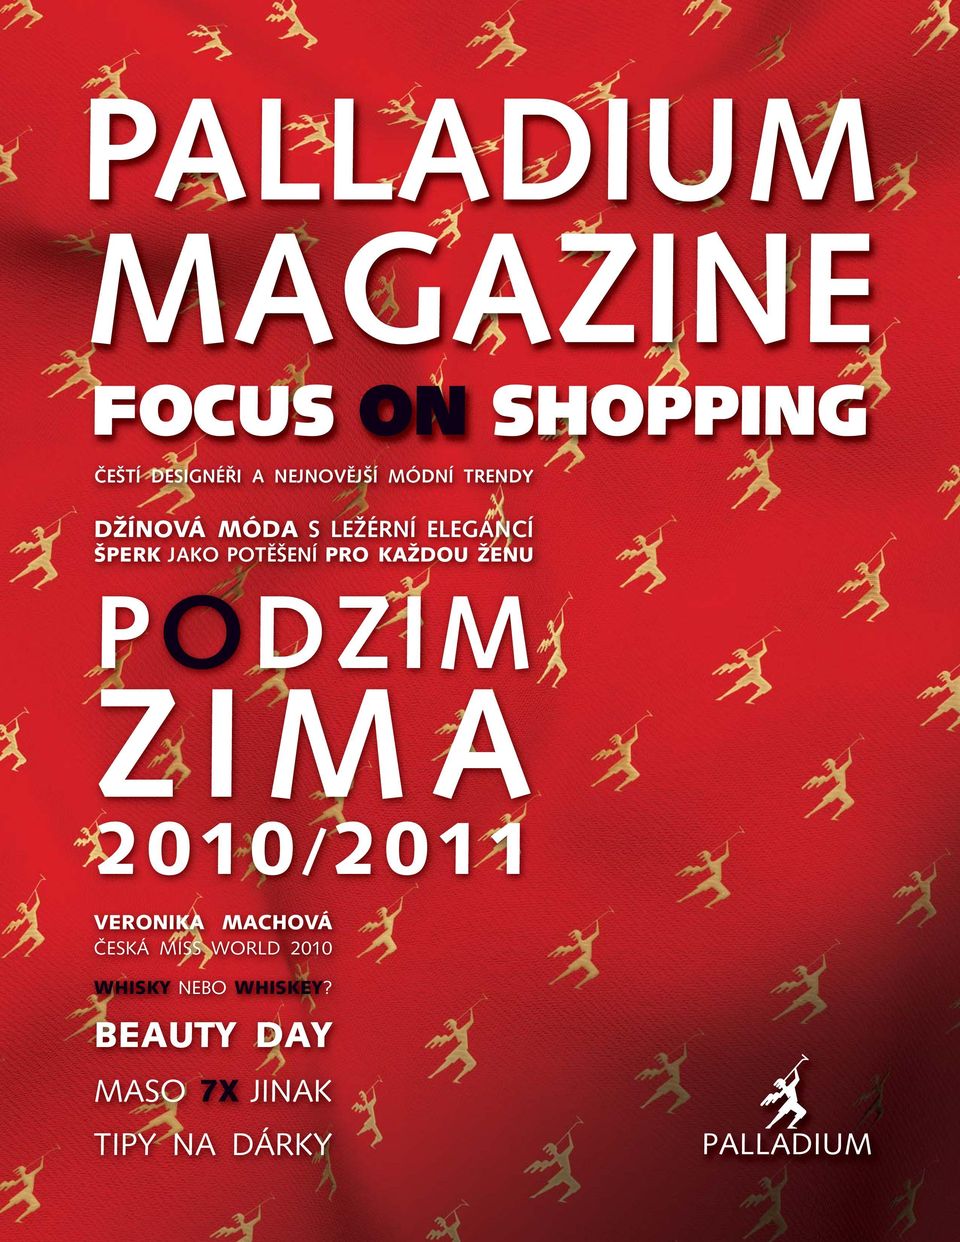 MAGAZINE ZIMA PALLADIUM PODZIM 2010/2011 FOCUS ON SHOPPING BEAUTY DAY MASO  7X JINAK TIPY NA DÁRKY - PDF Free Download